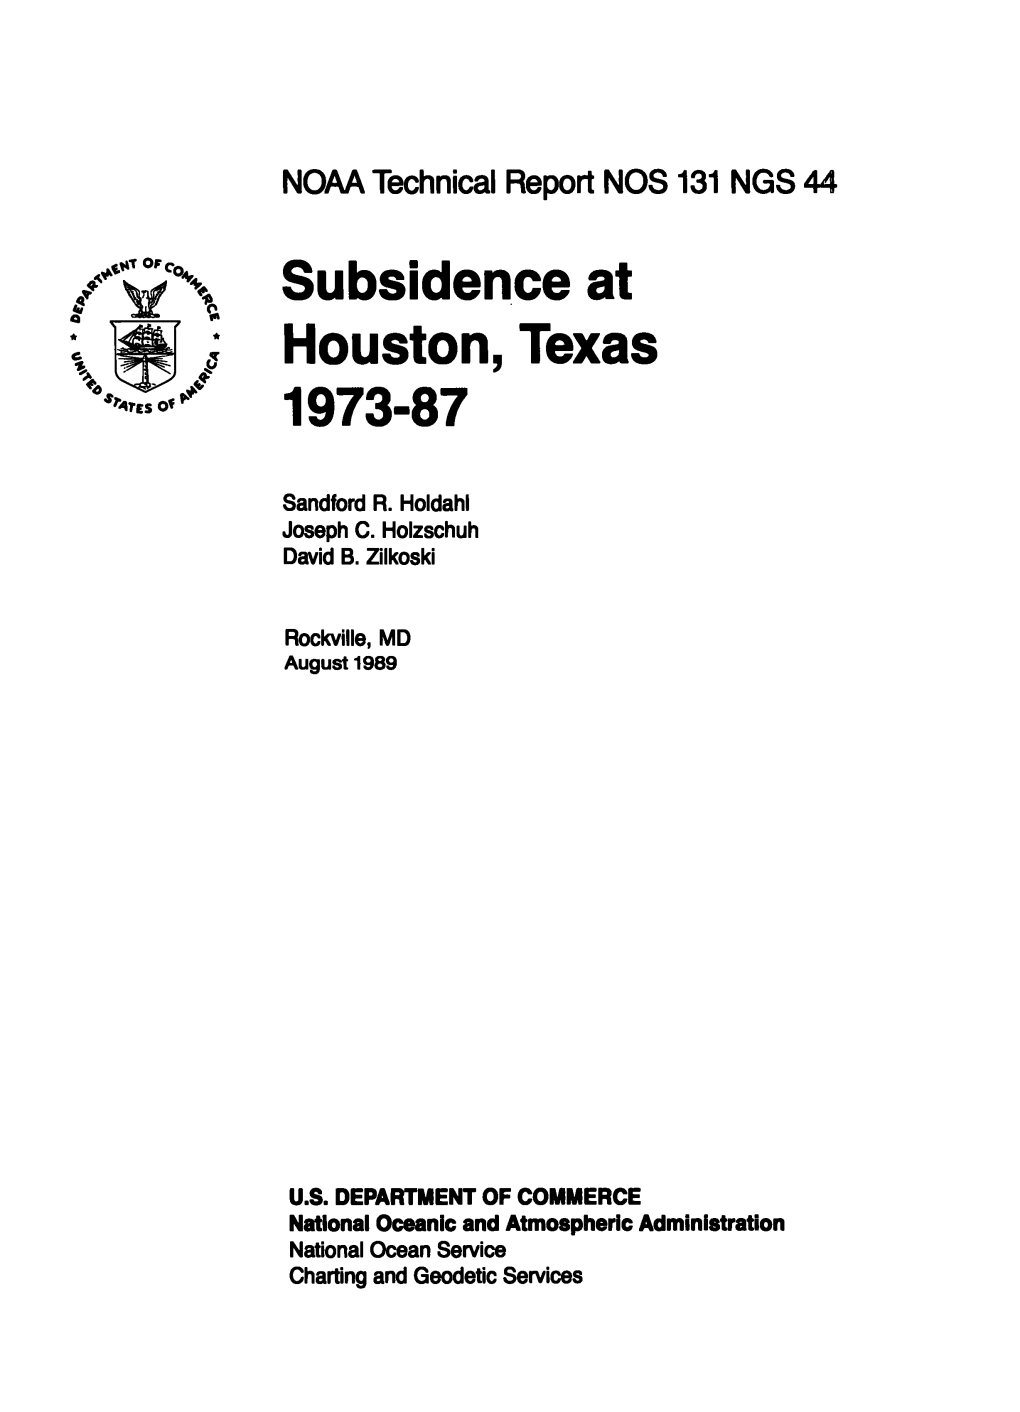 Subsidence at Houston, Texas 1973-87